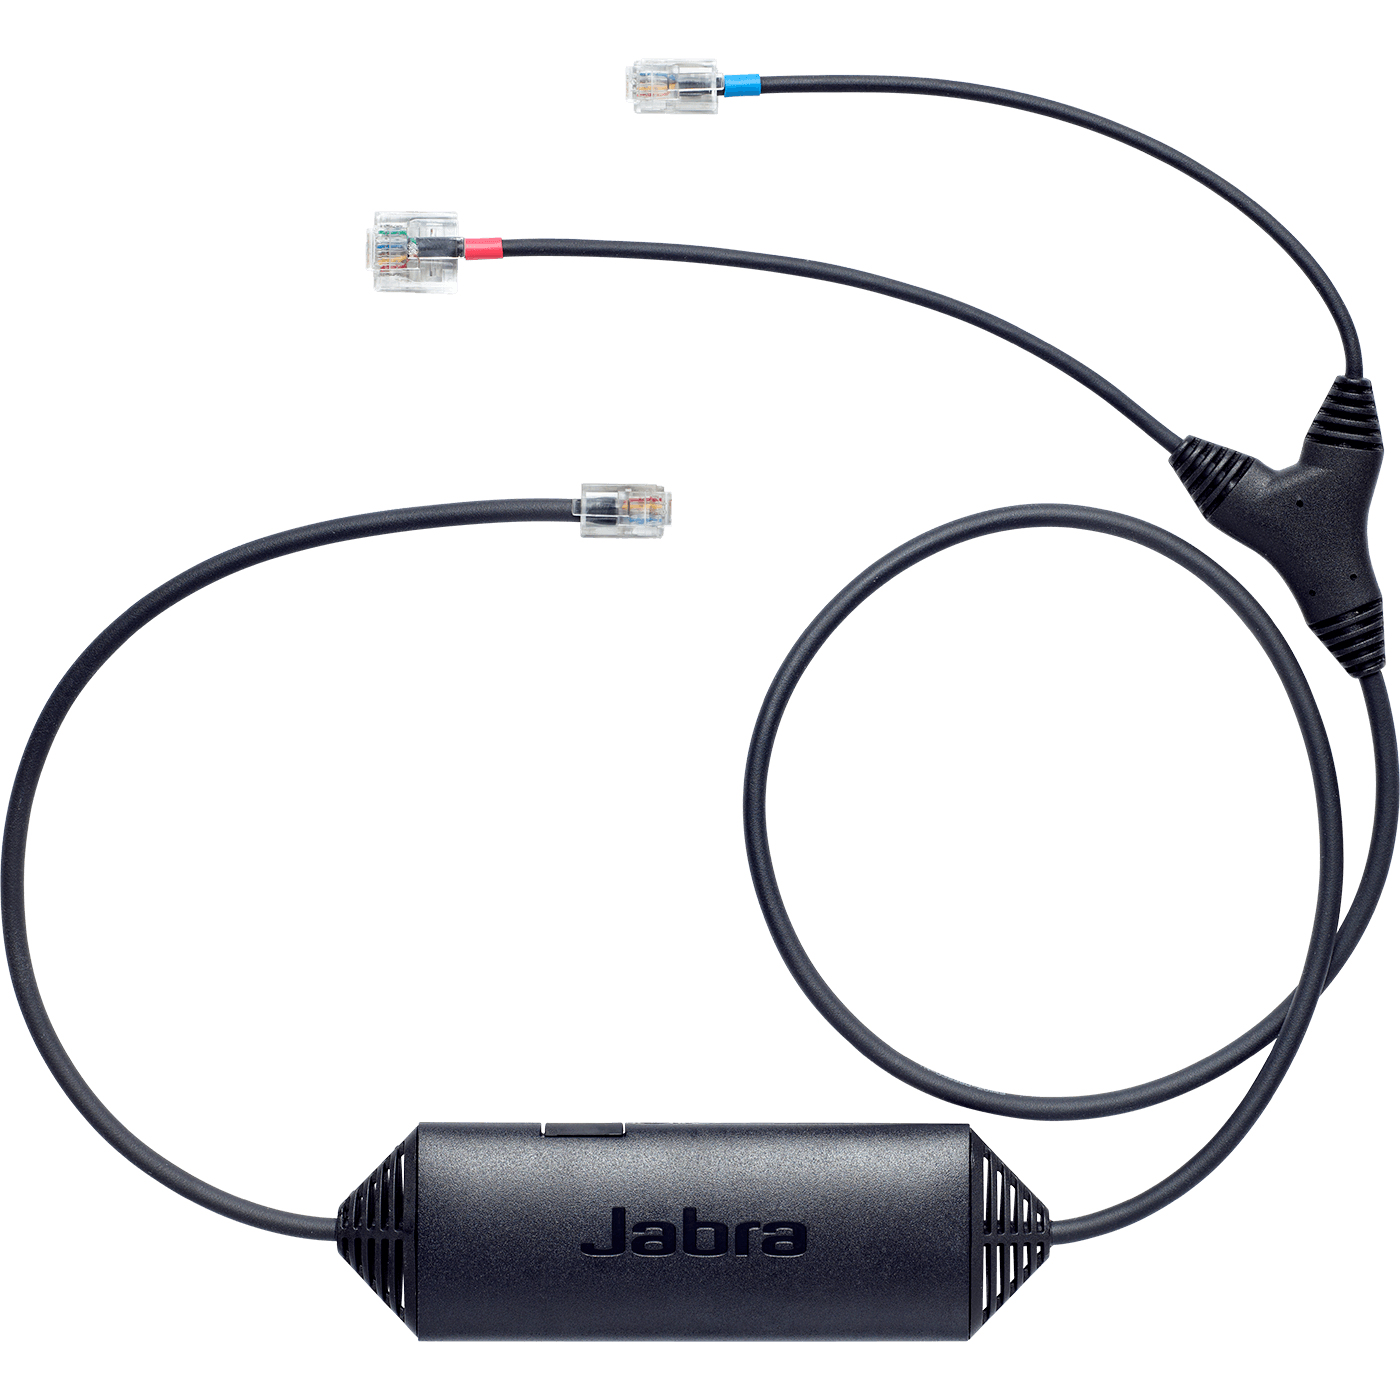 Photos - Portable Audio Accessories Jabra LINK 14201-33 